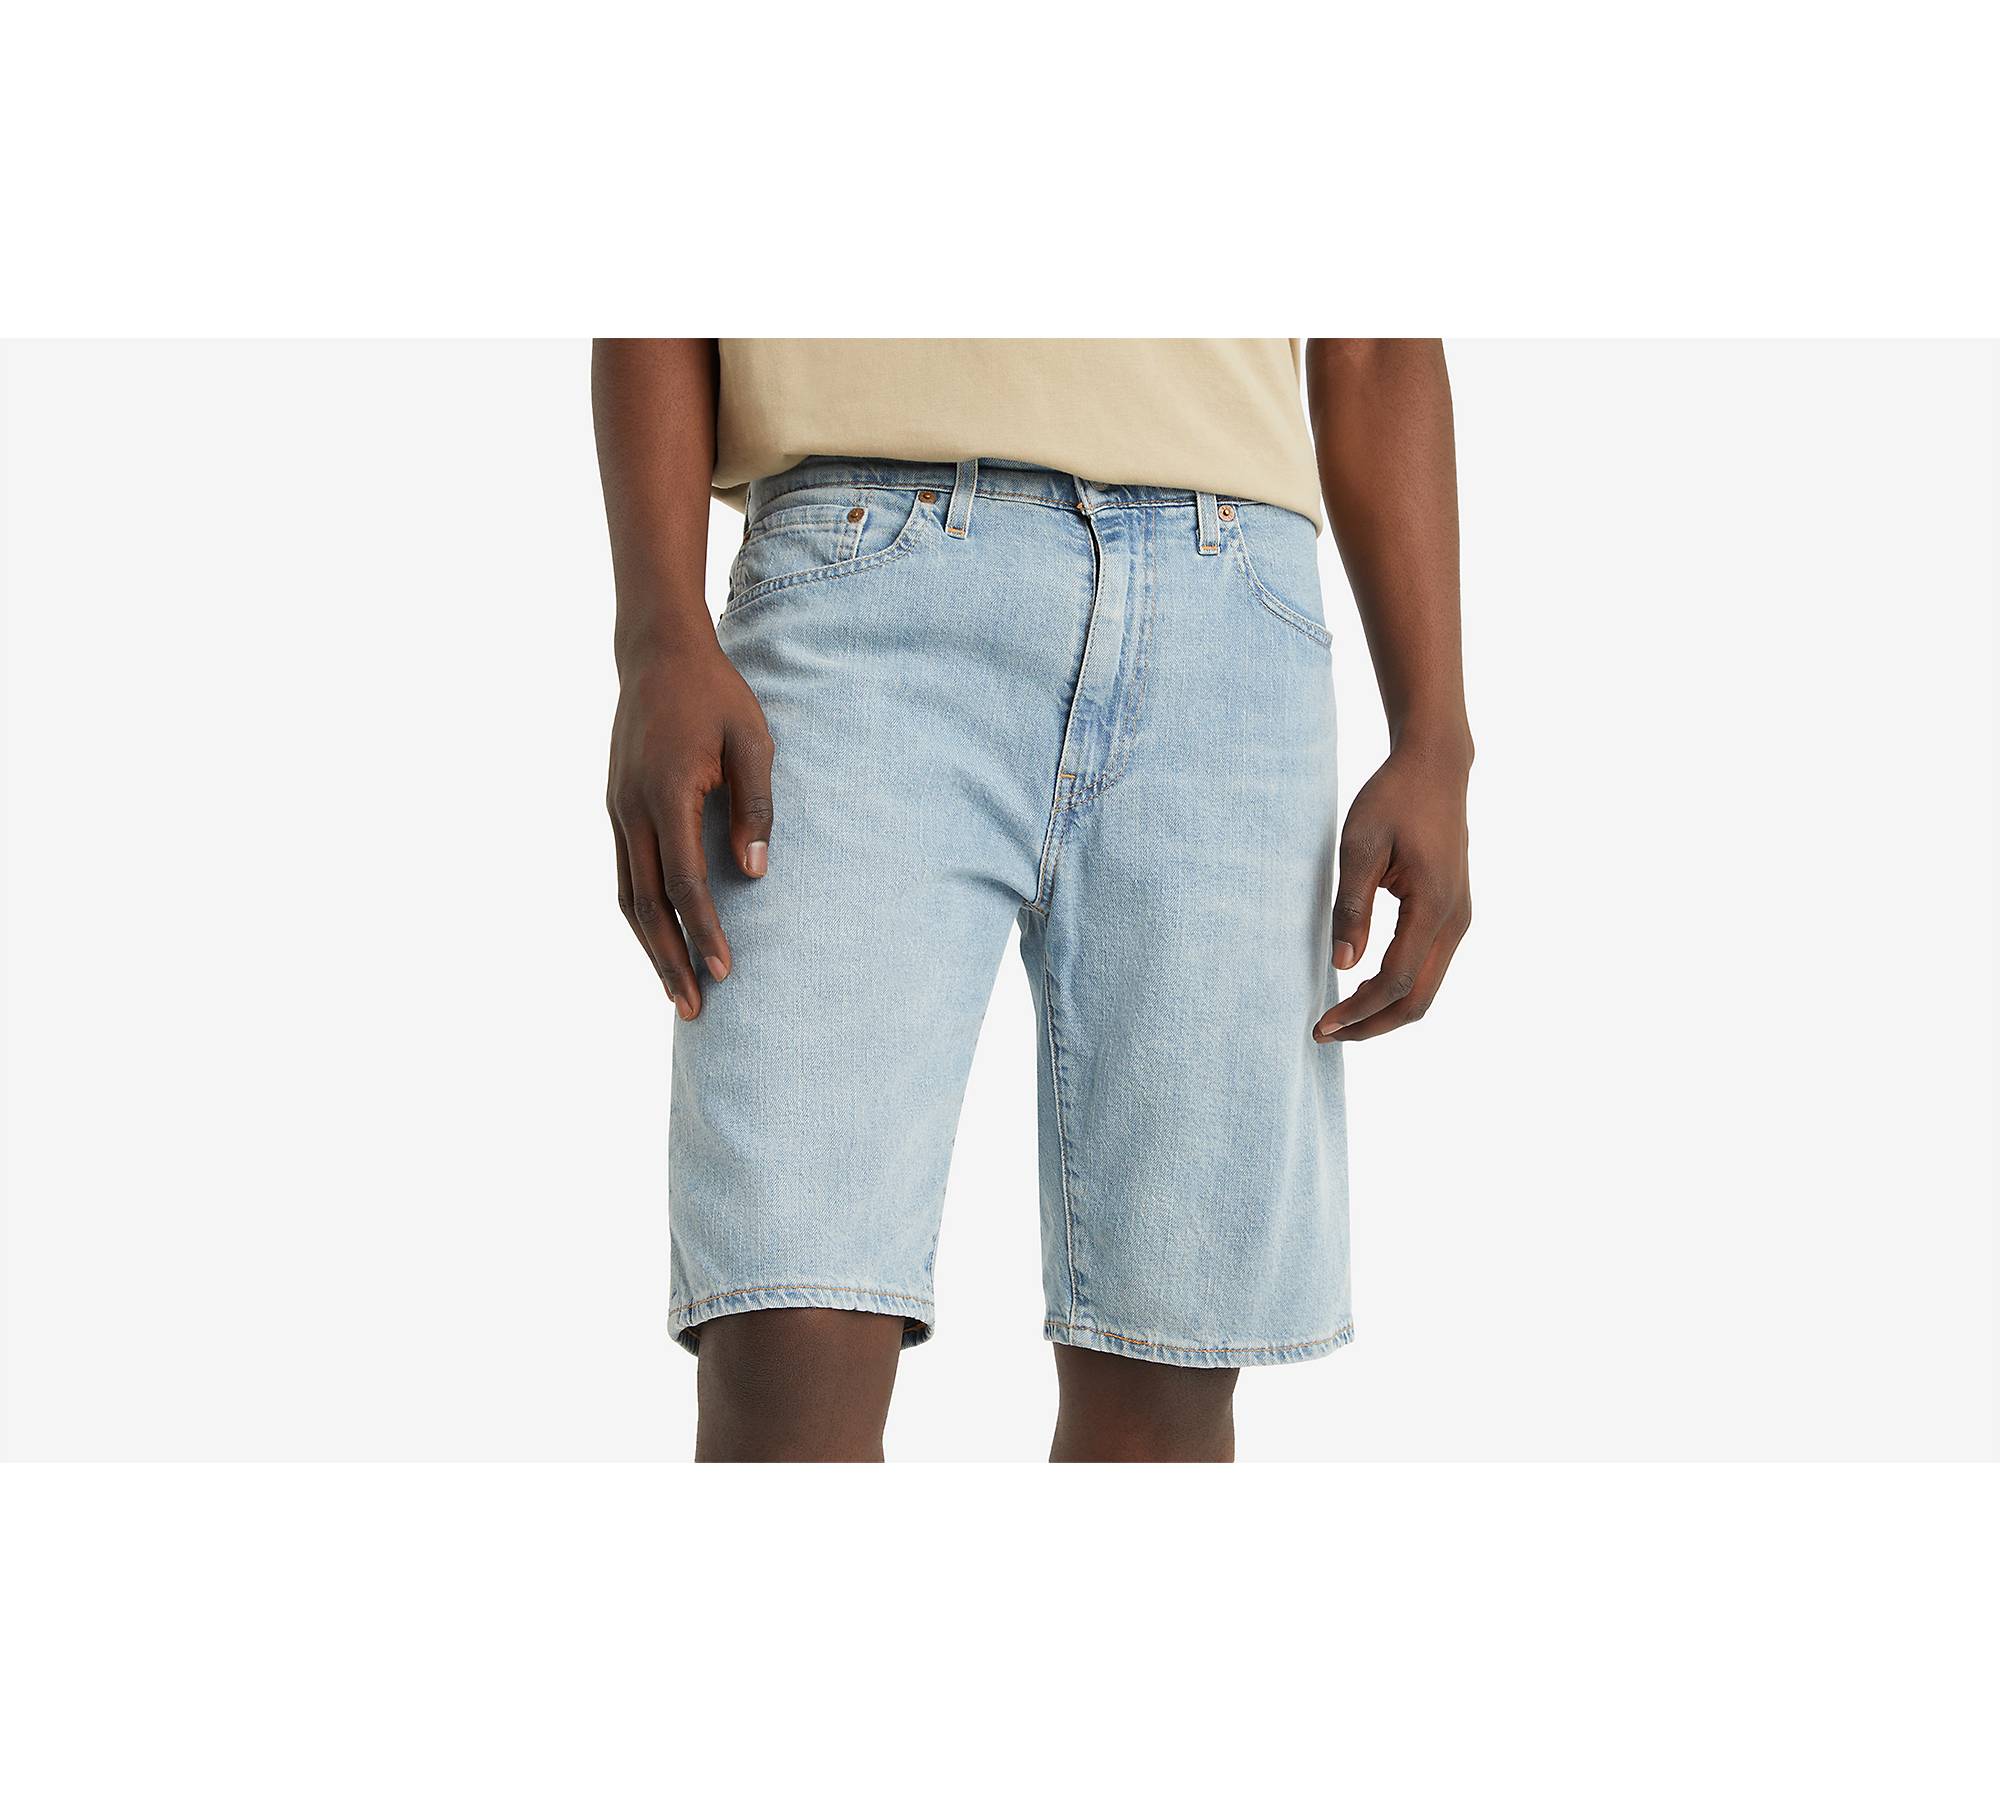 405 Standard 10 Men's Shorts - Light Wash